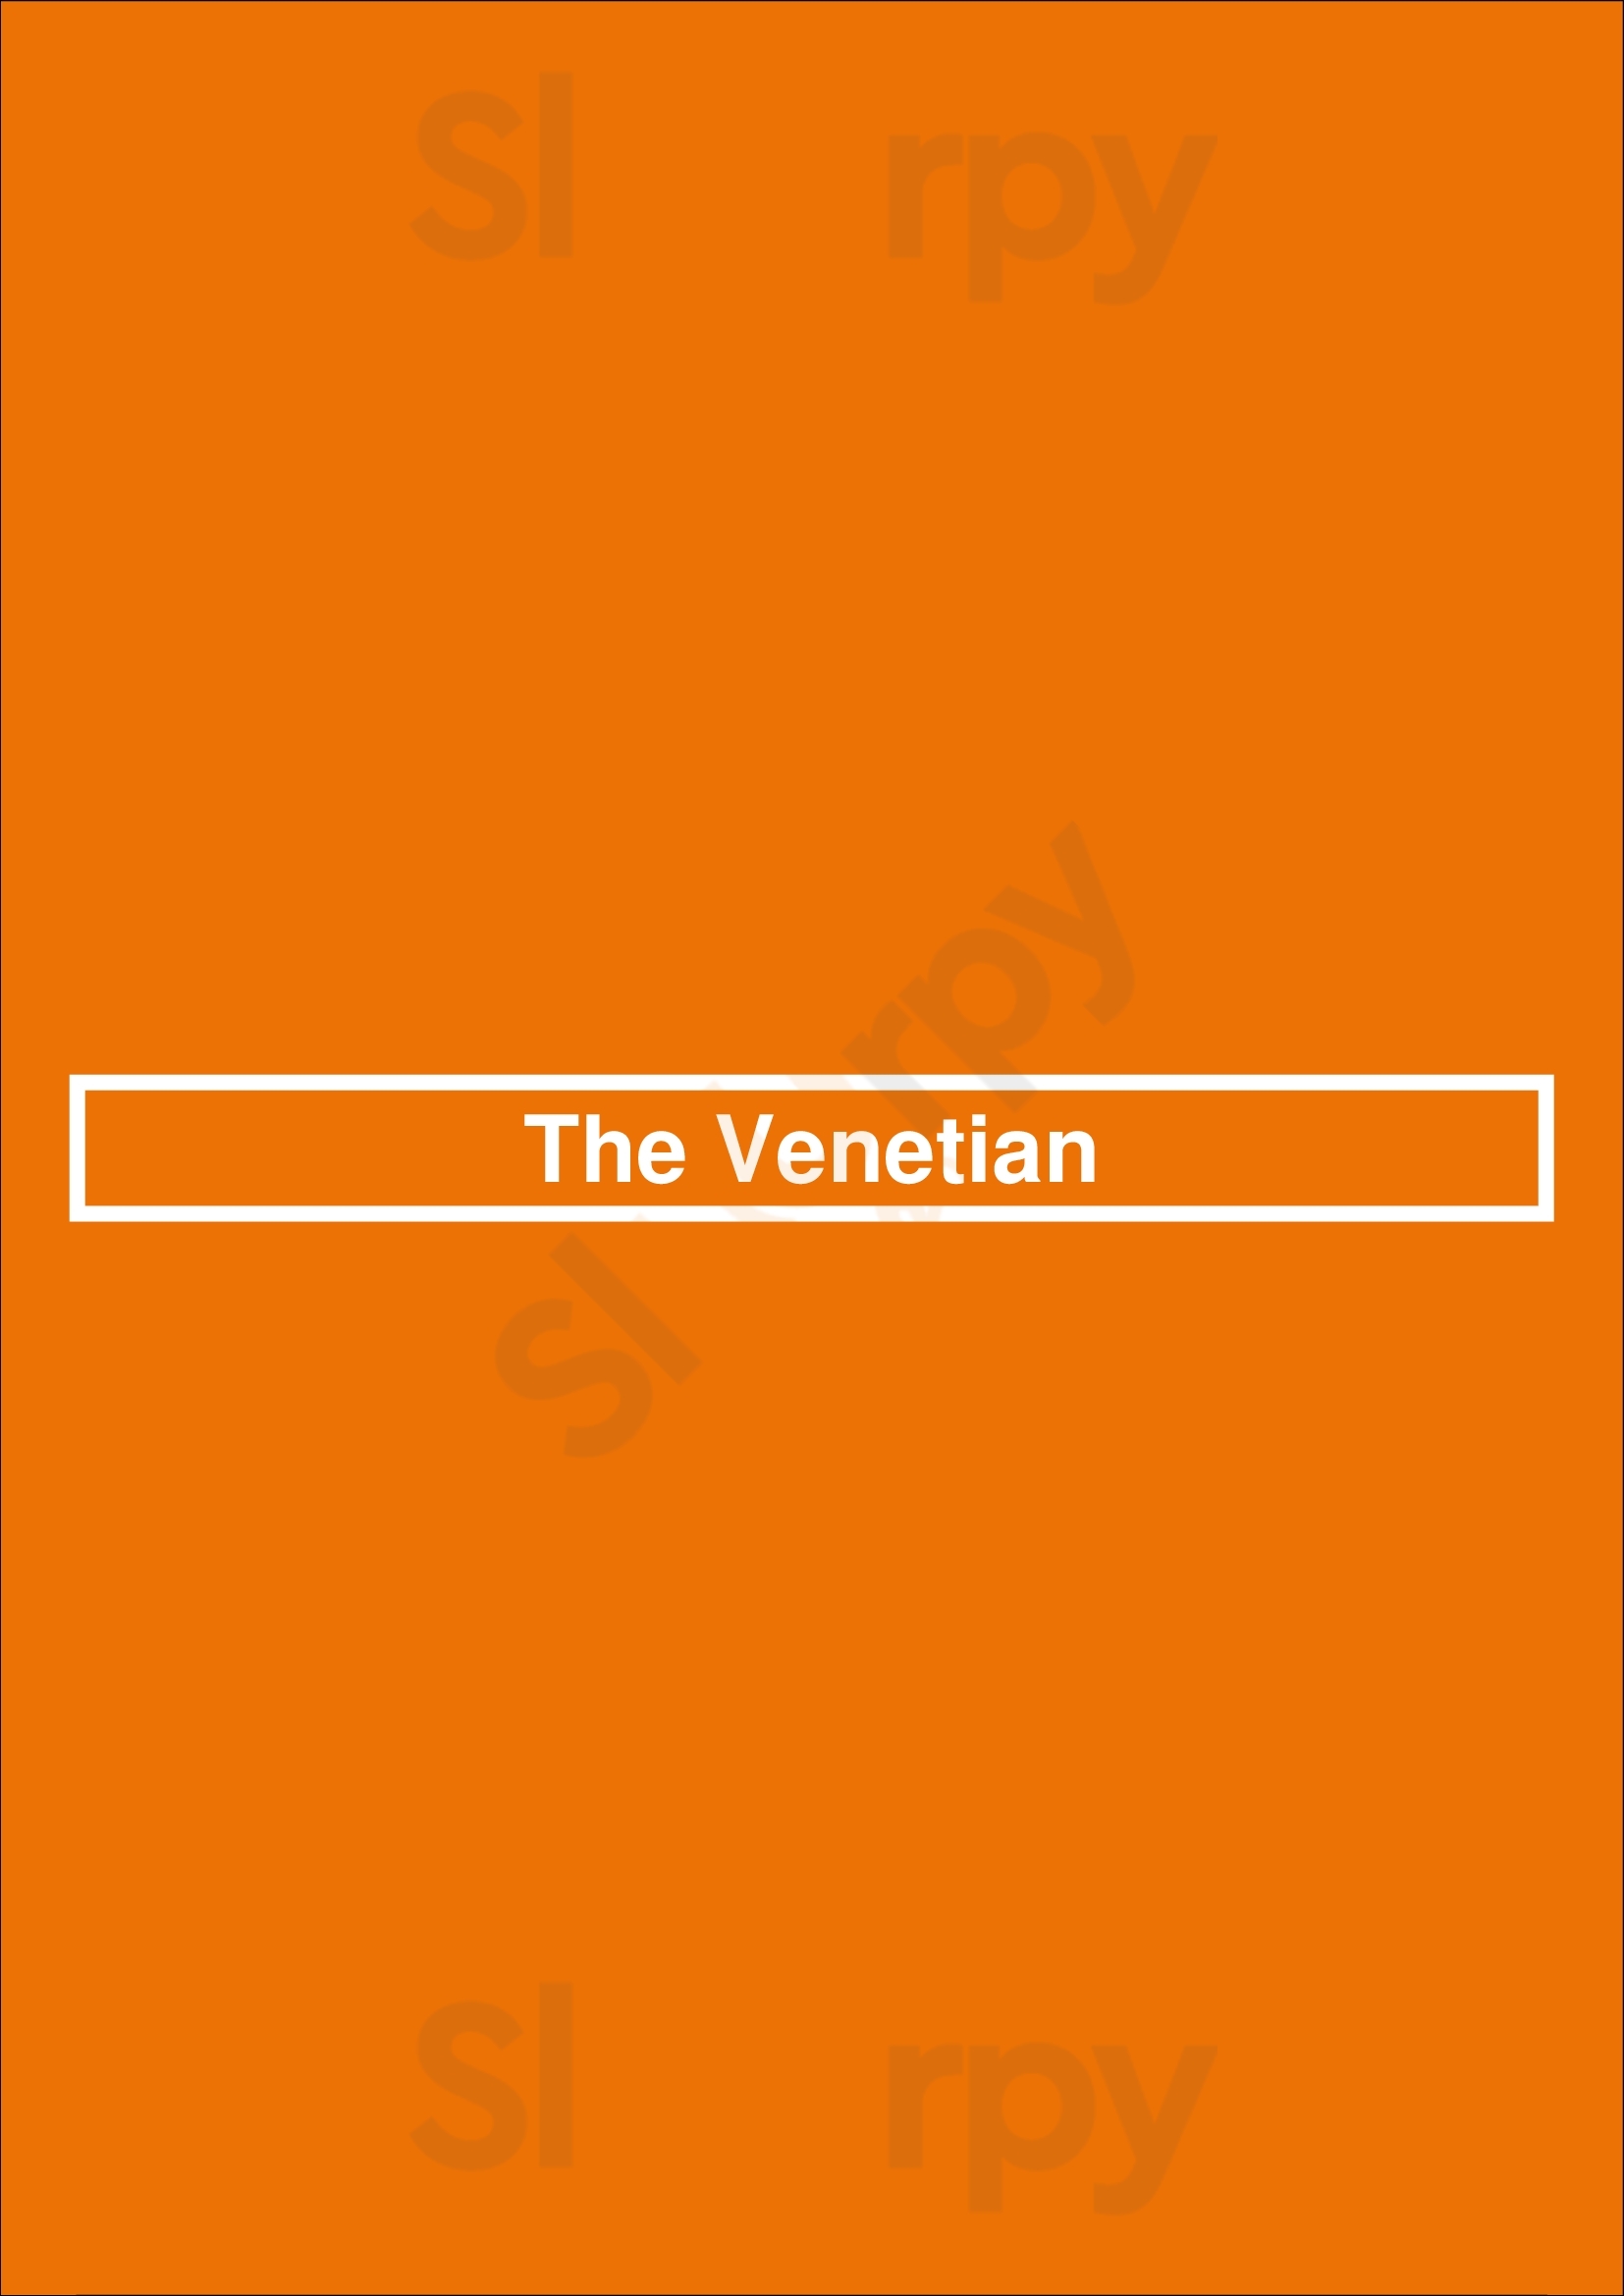 The Venetian San Diego Menu - 1